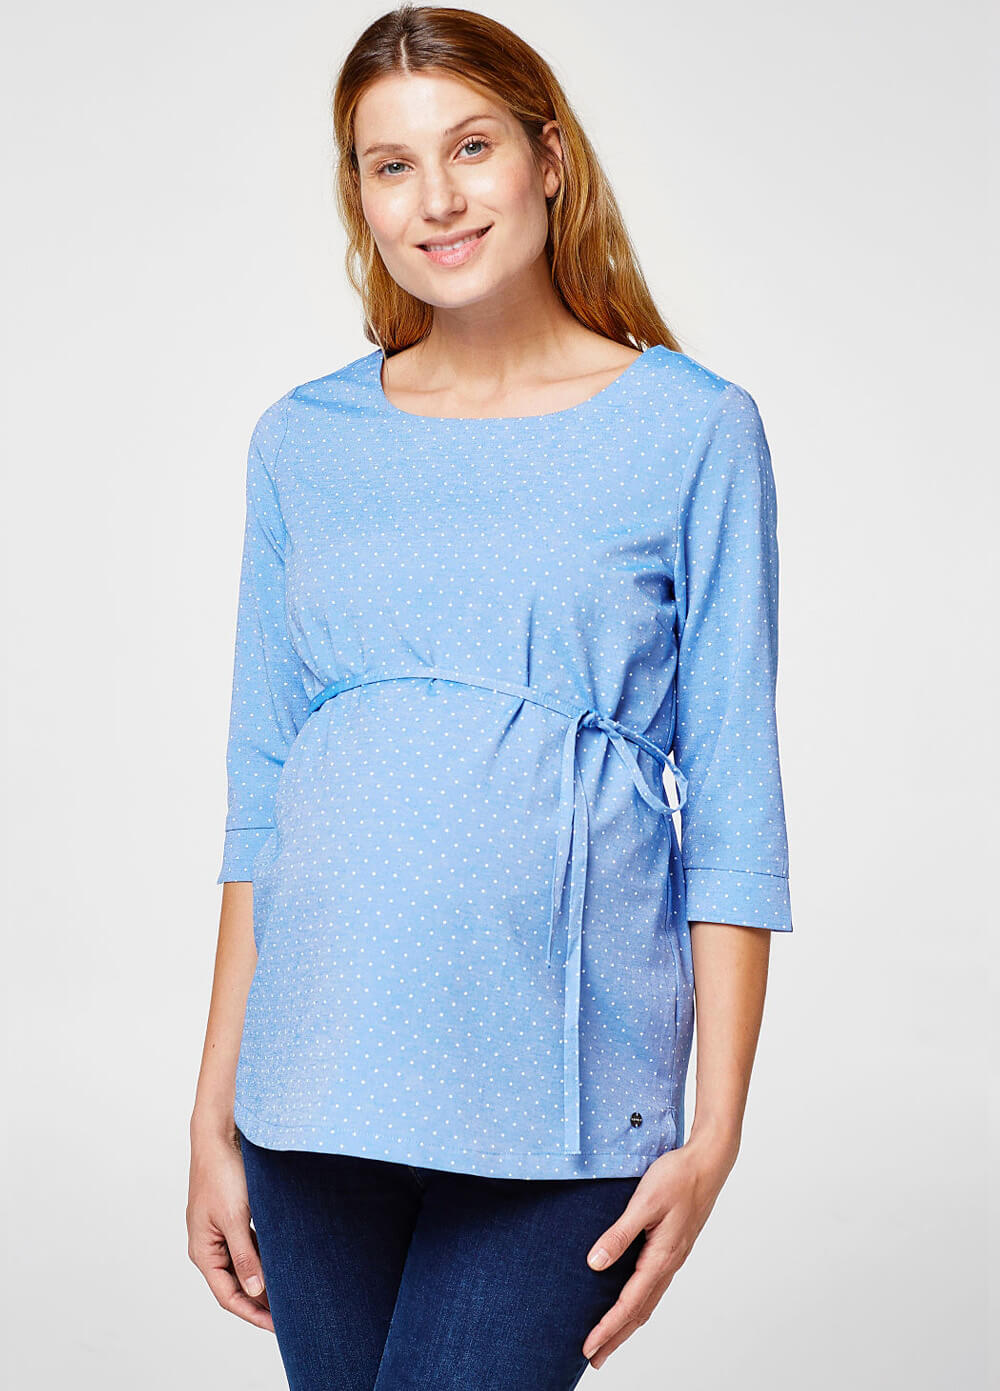 Blue Polkadot Maternity Blouse by Esprit